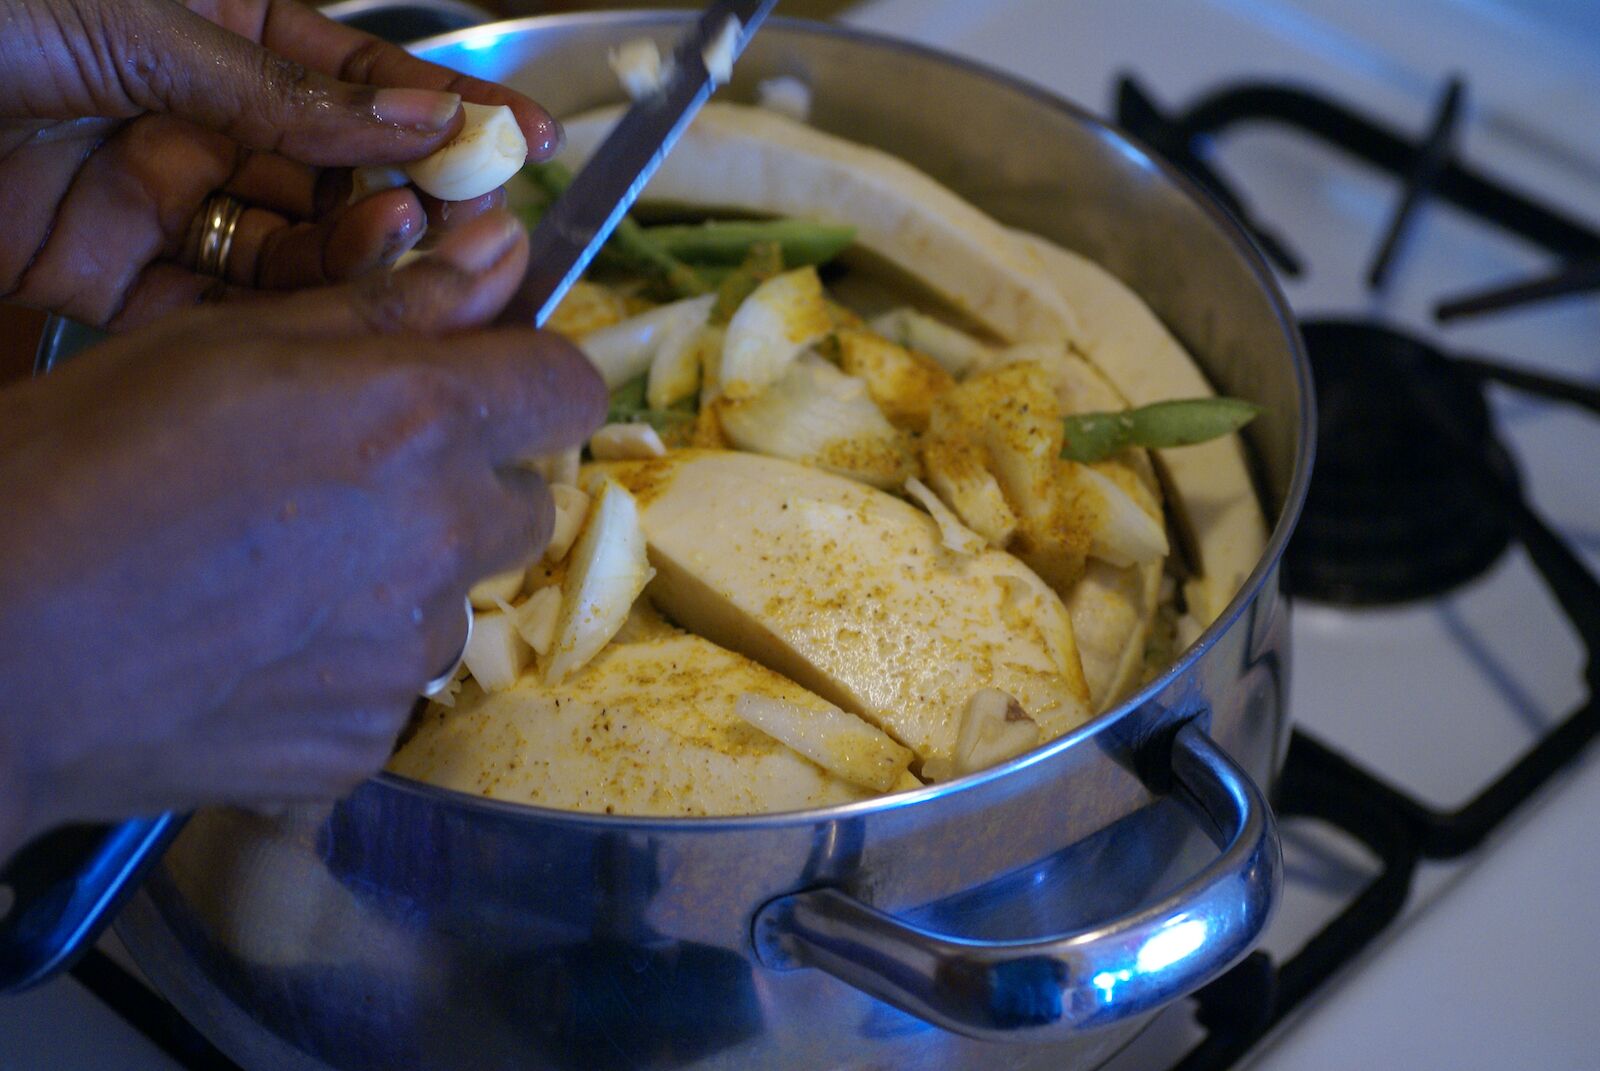 The preparation of Grenada national dish "Oil Down"